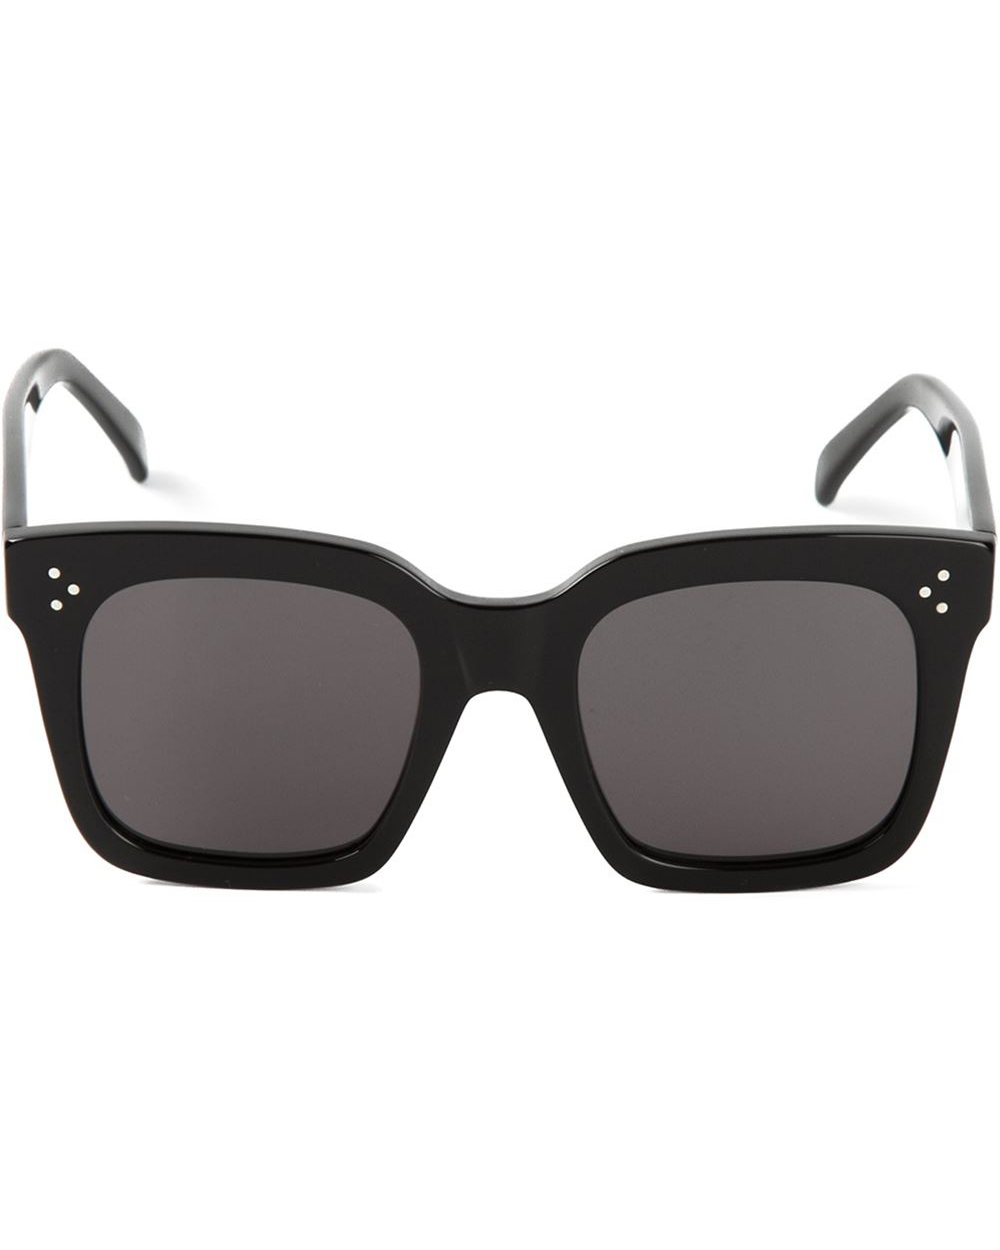 Celine Tilda sunglasses, $XXX